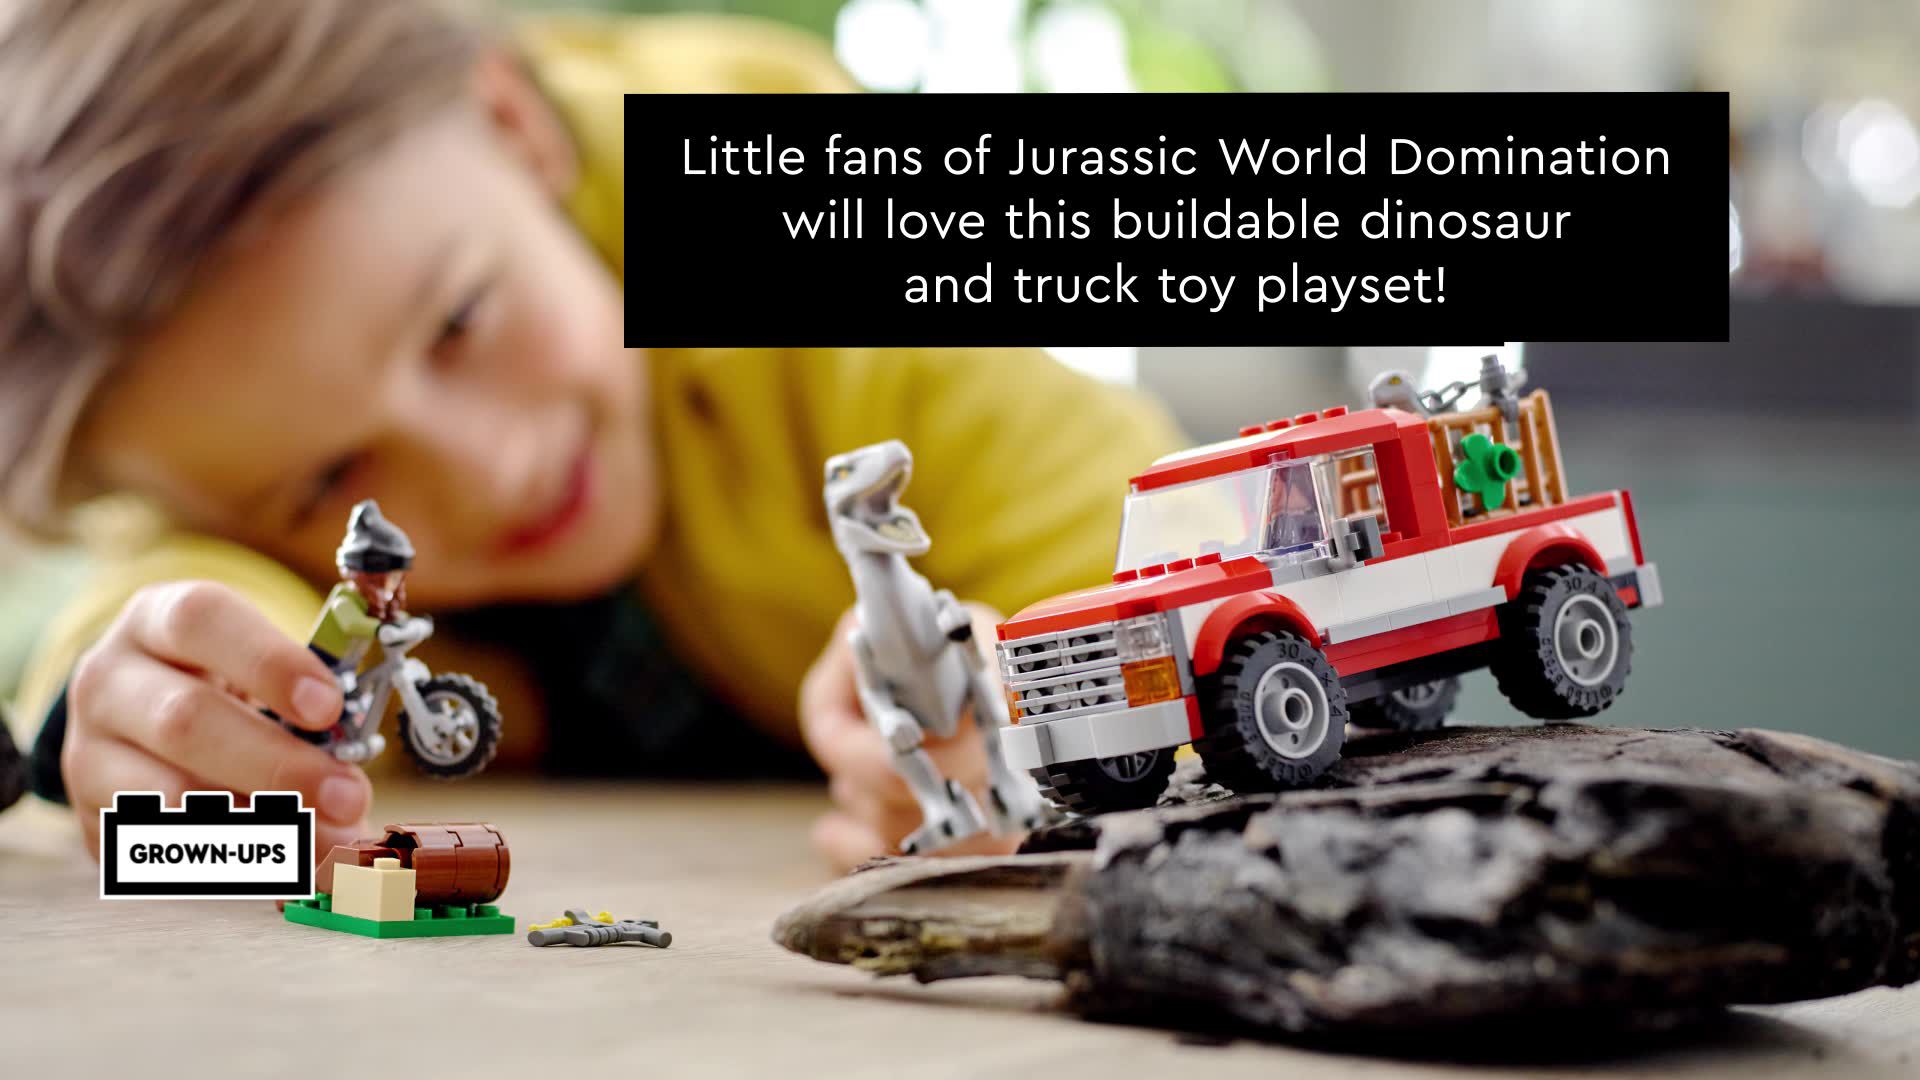 LEGO Jurassic World 76946 Blue & Beta Velociraptor Capture